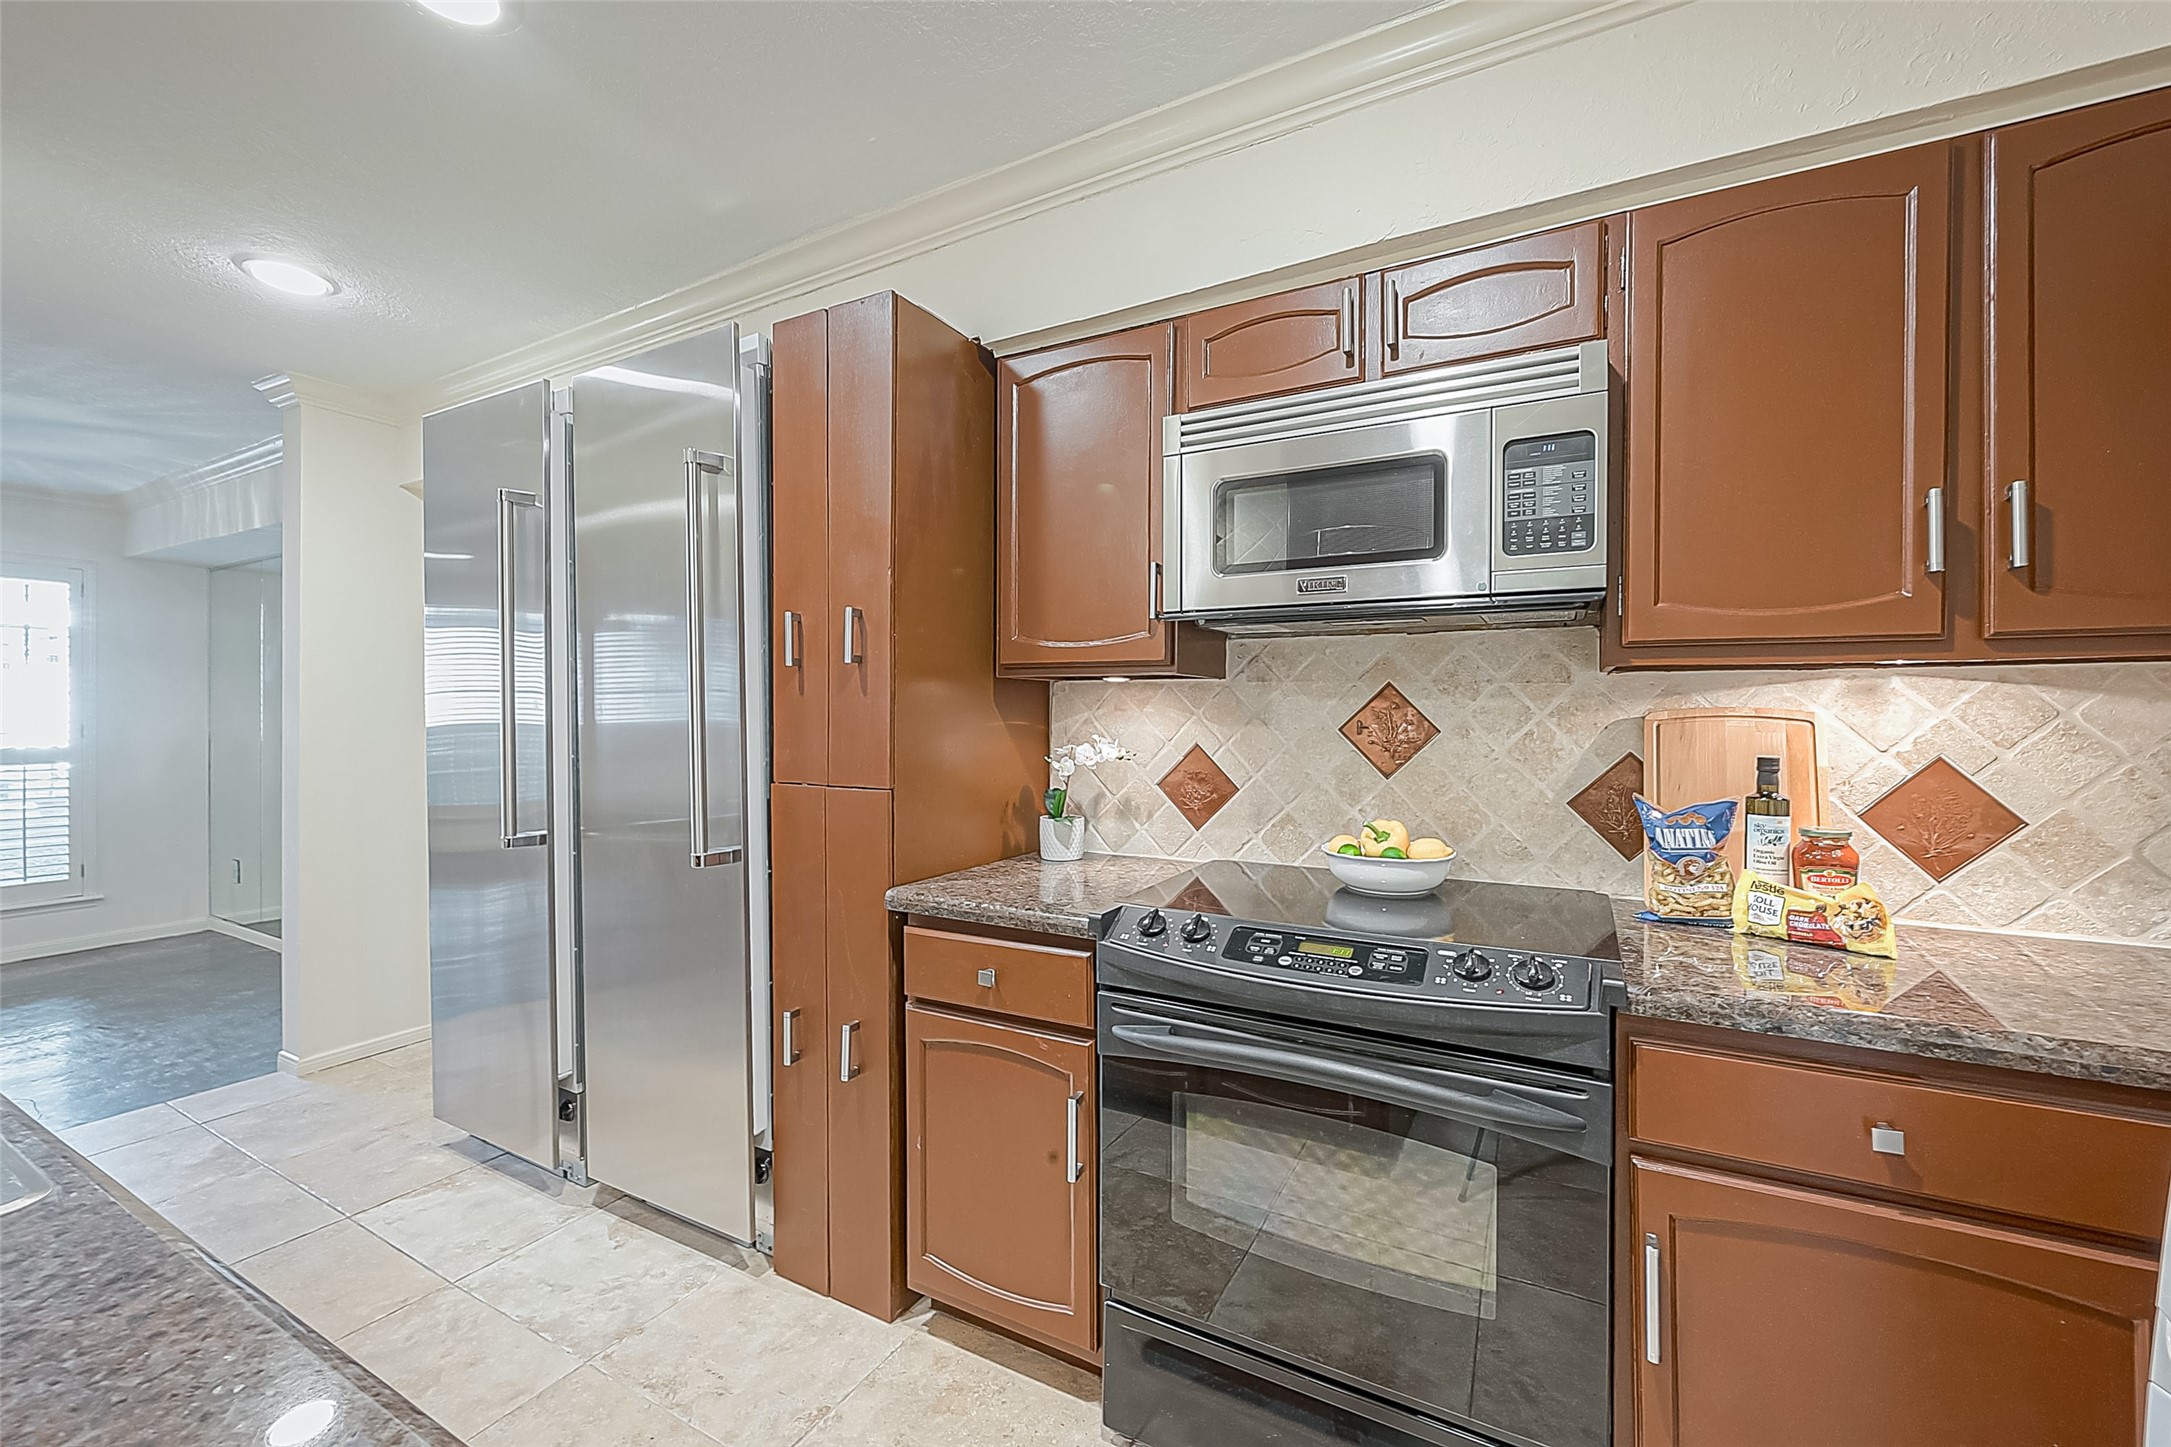 Kitchen has stainless steel Viking appliances with Sub-Zero refrigerator and freezer.